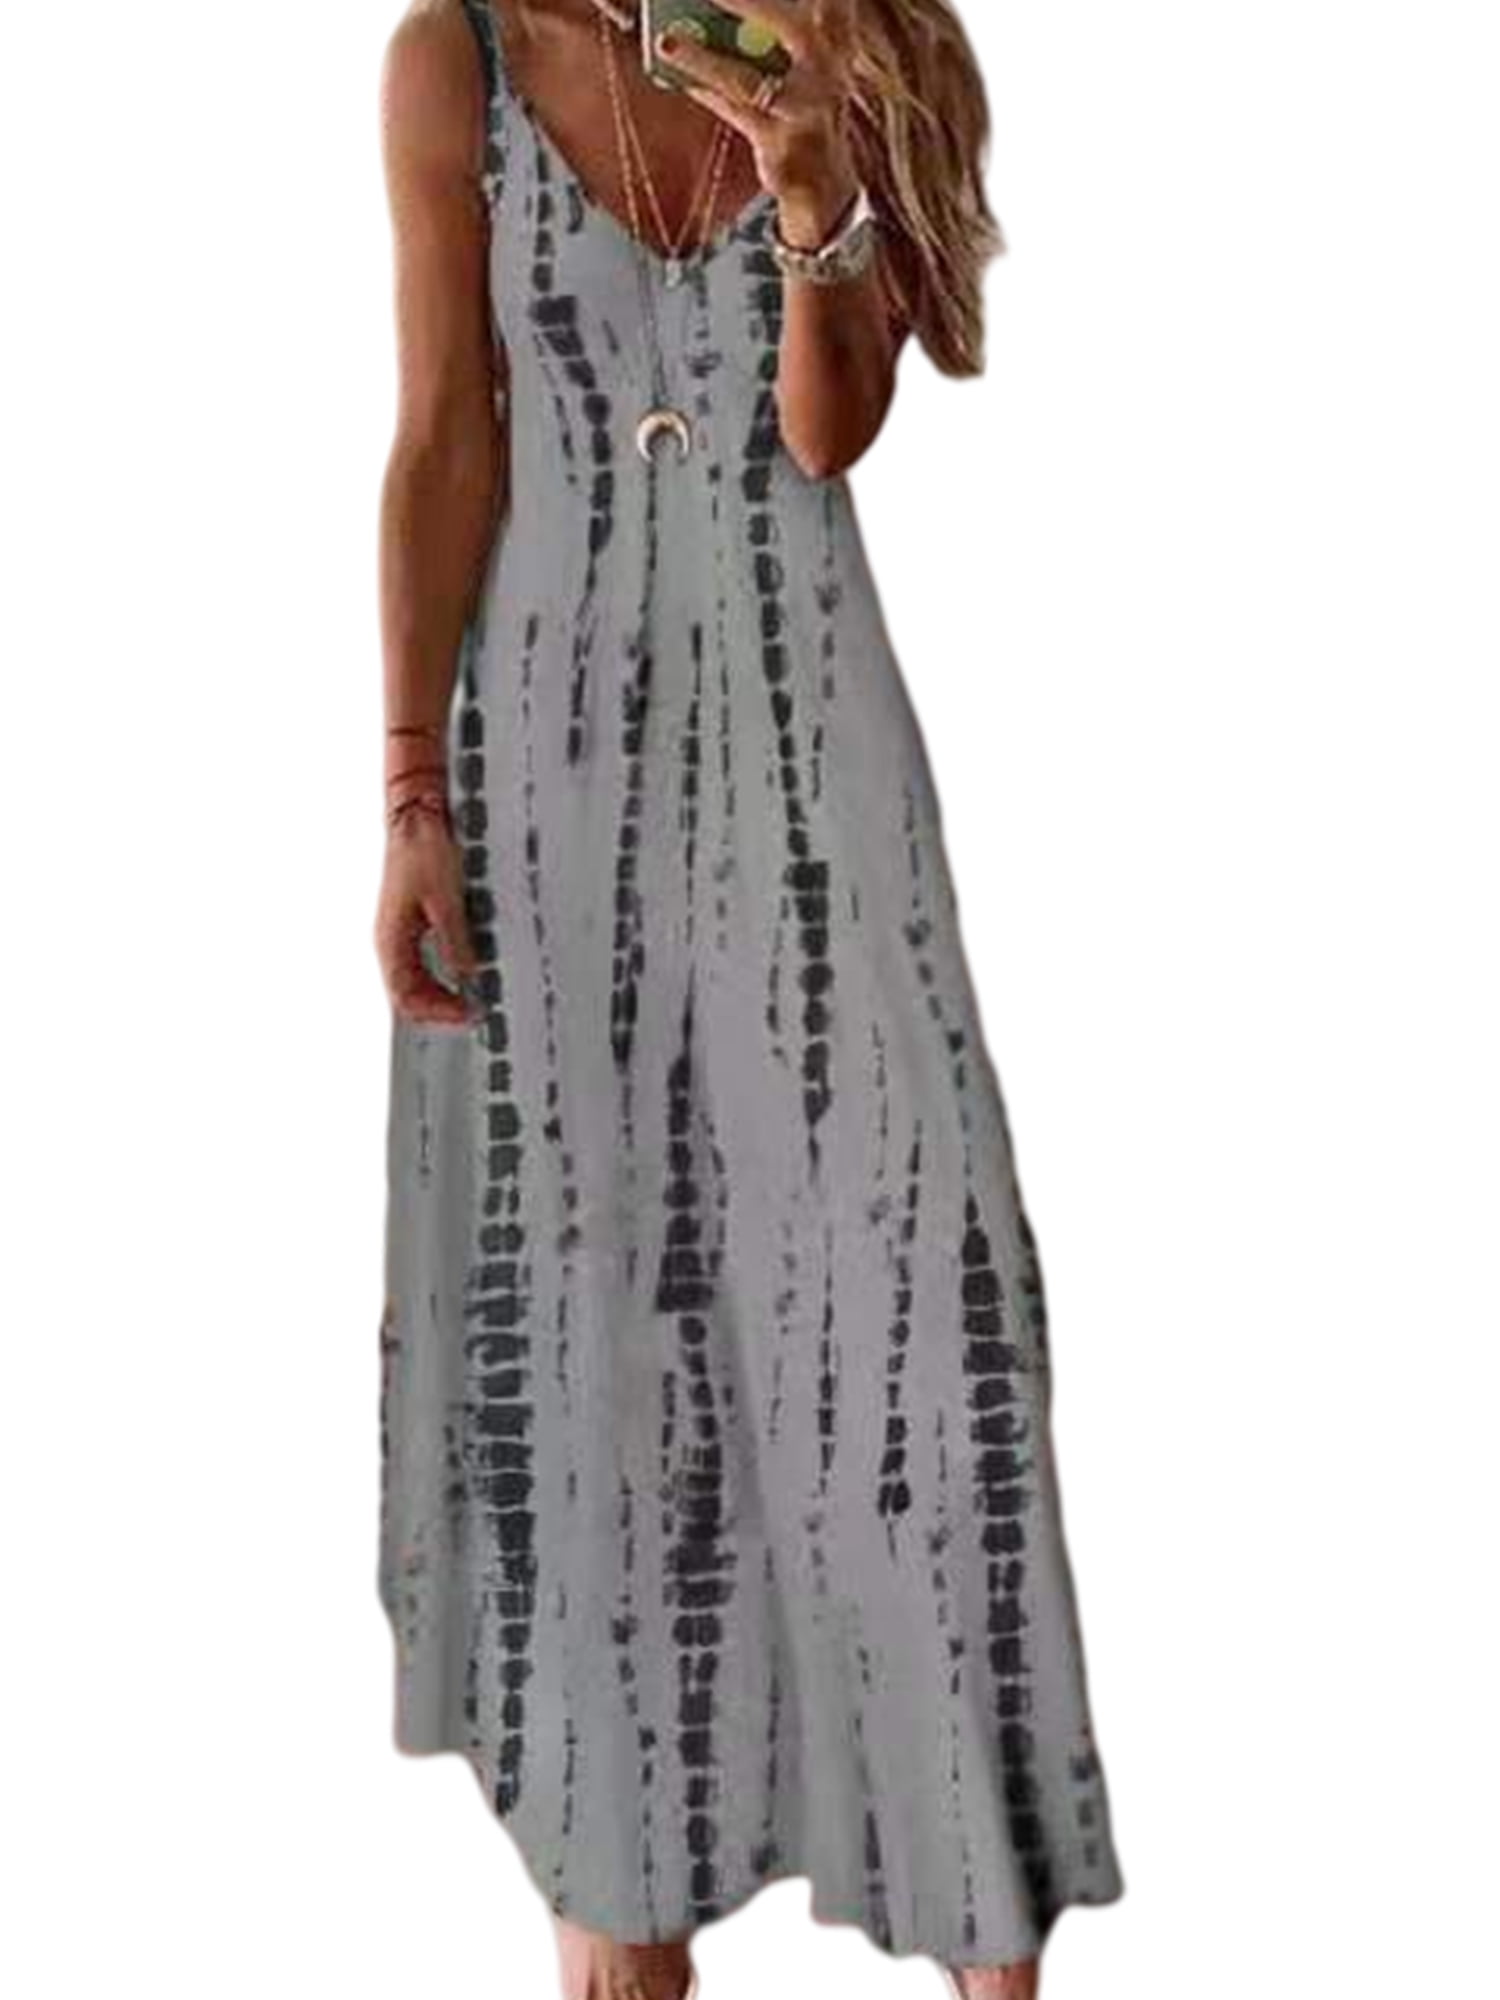 Maxi Dresses for Women Casual,Womens Tie Dye V Neck Sleeveless Split Long Maxi Dress Casual Summer Beach Sundress 